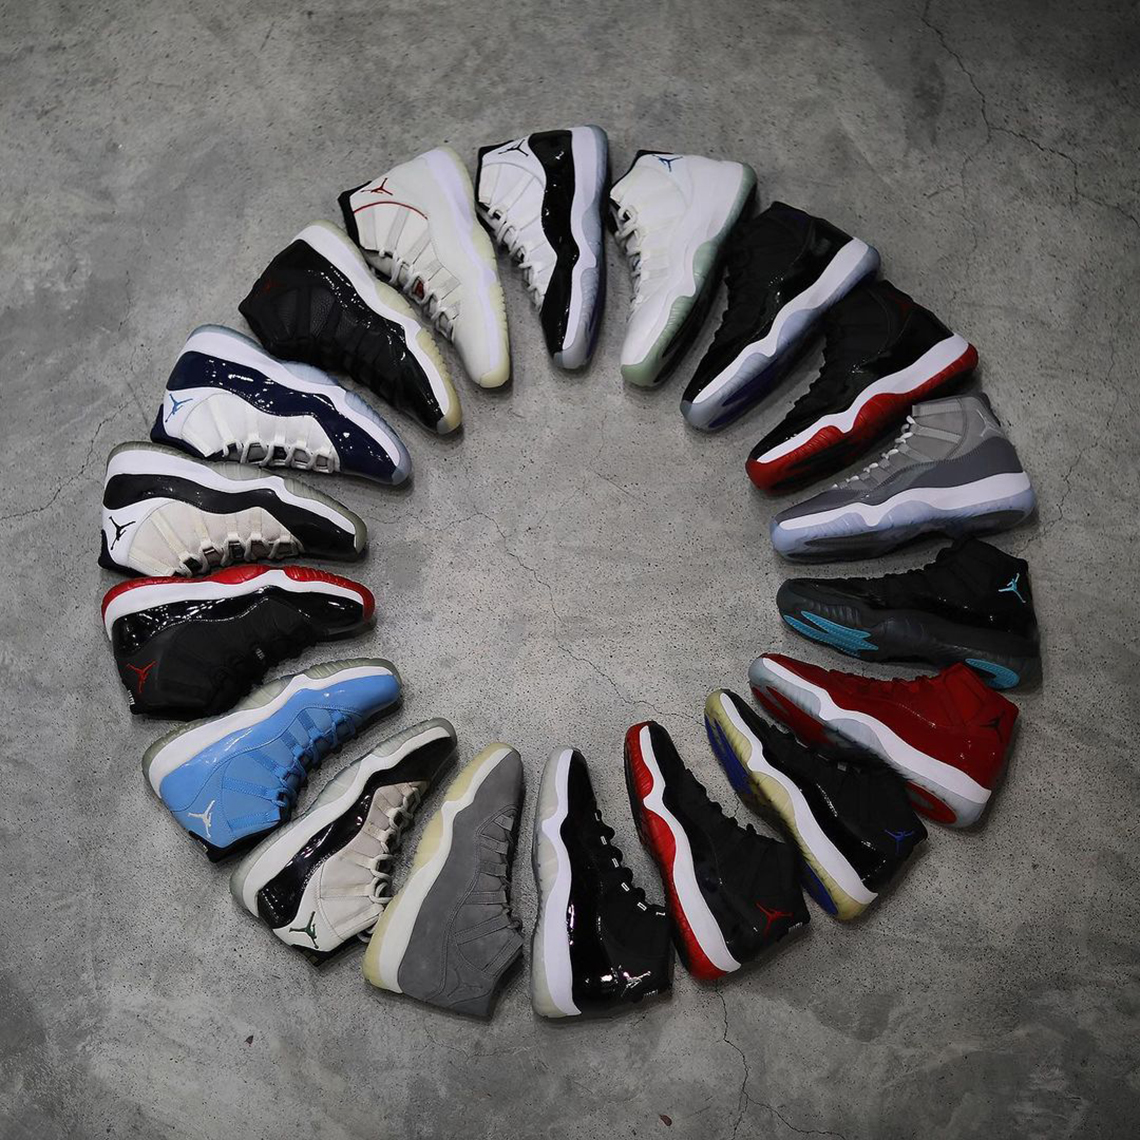 Every Jordan 11 Retro In History Photos | SneakerNews.com